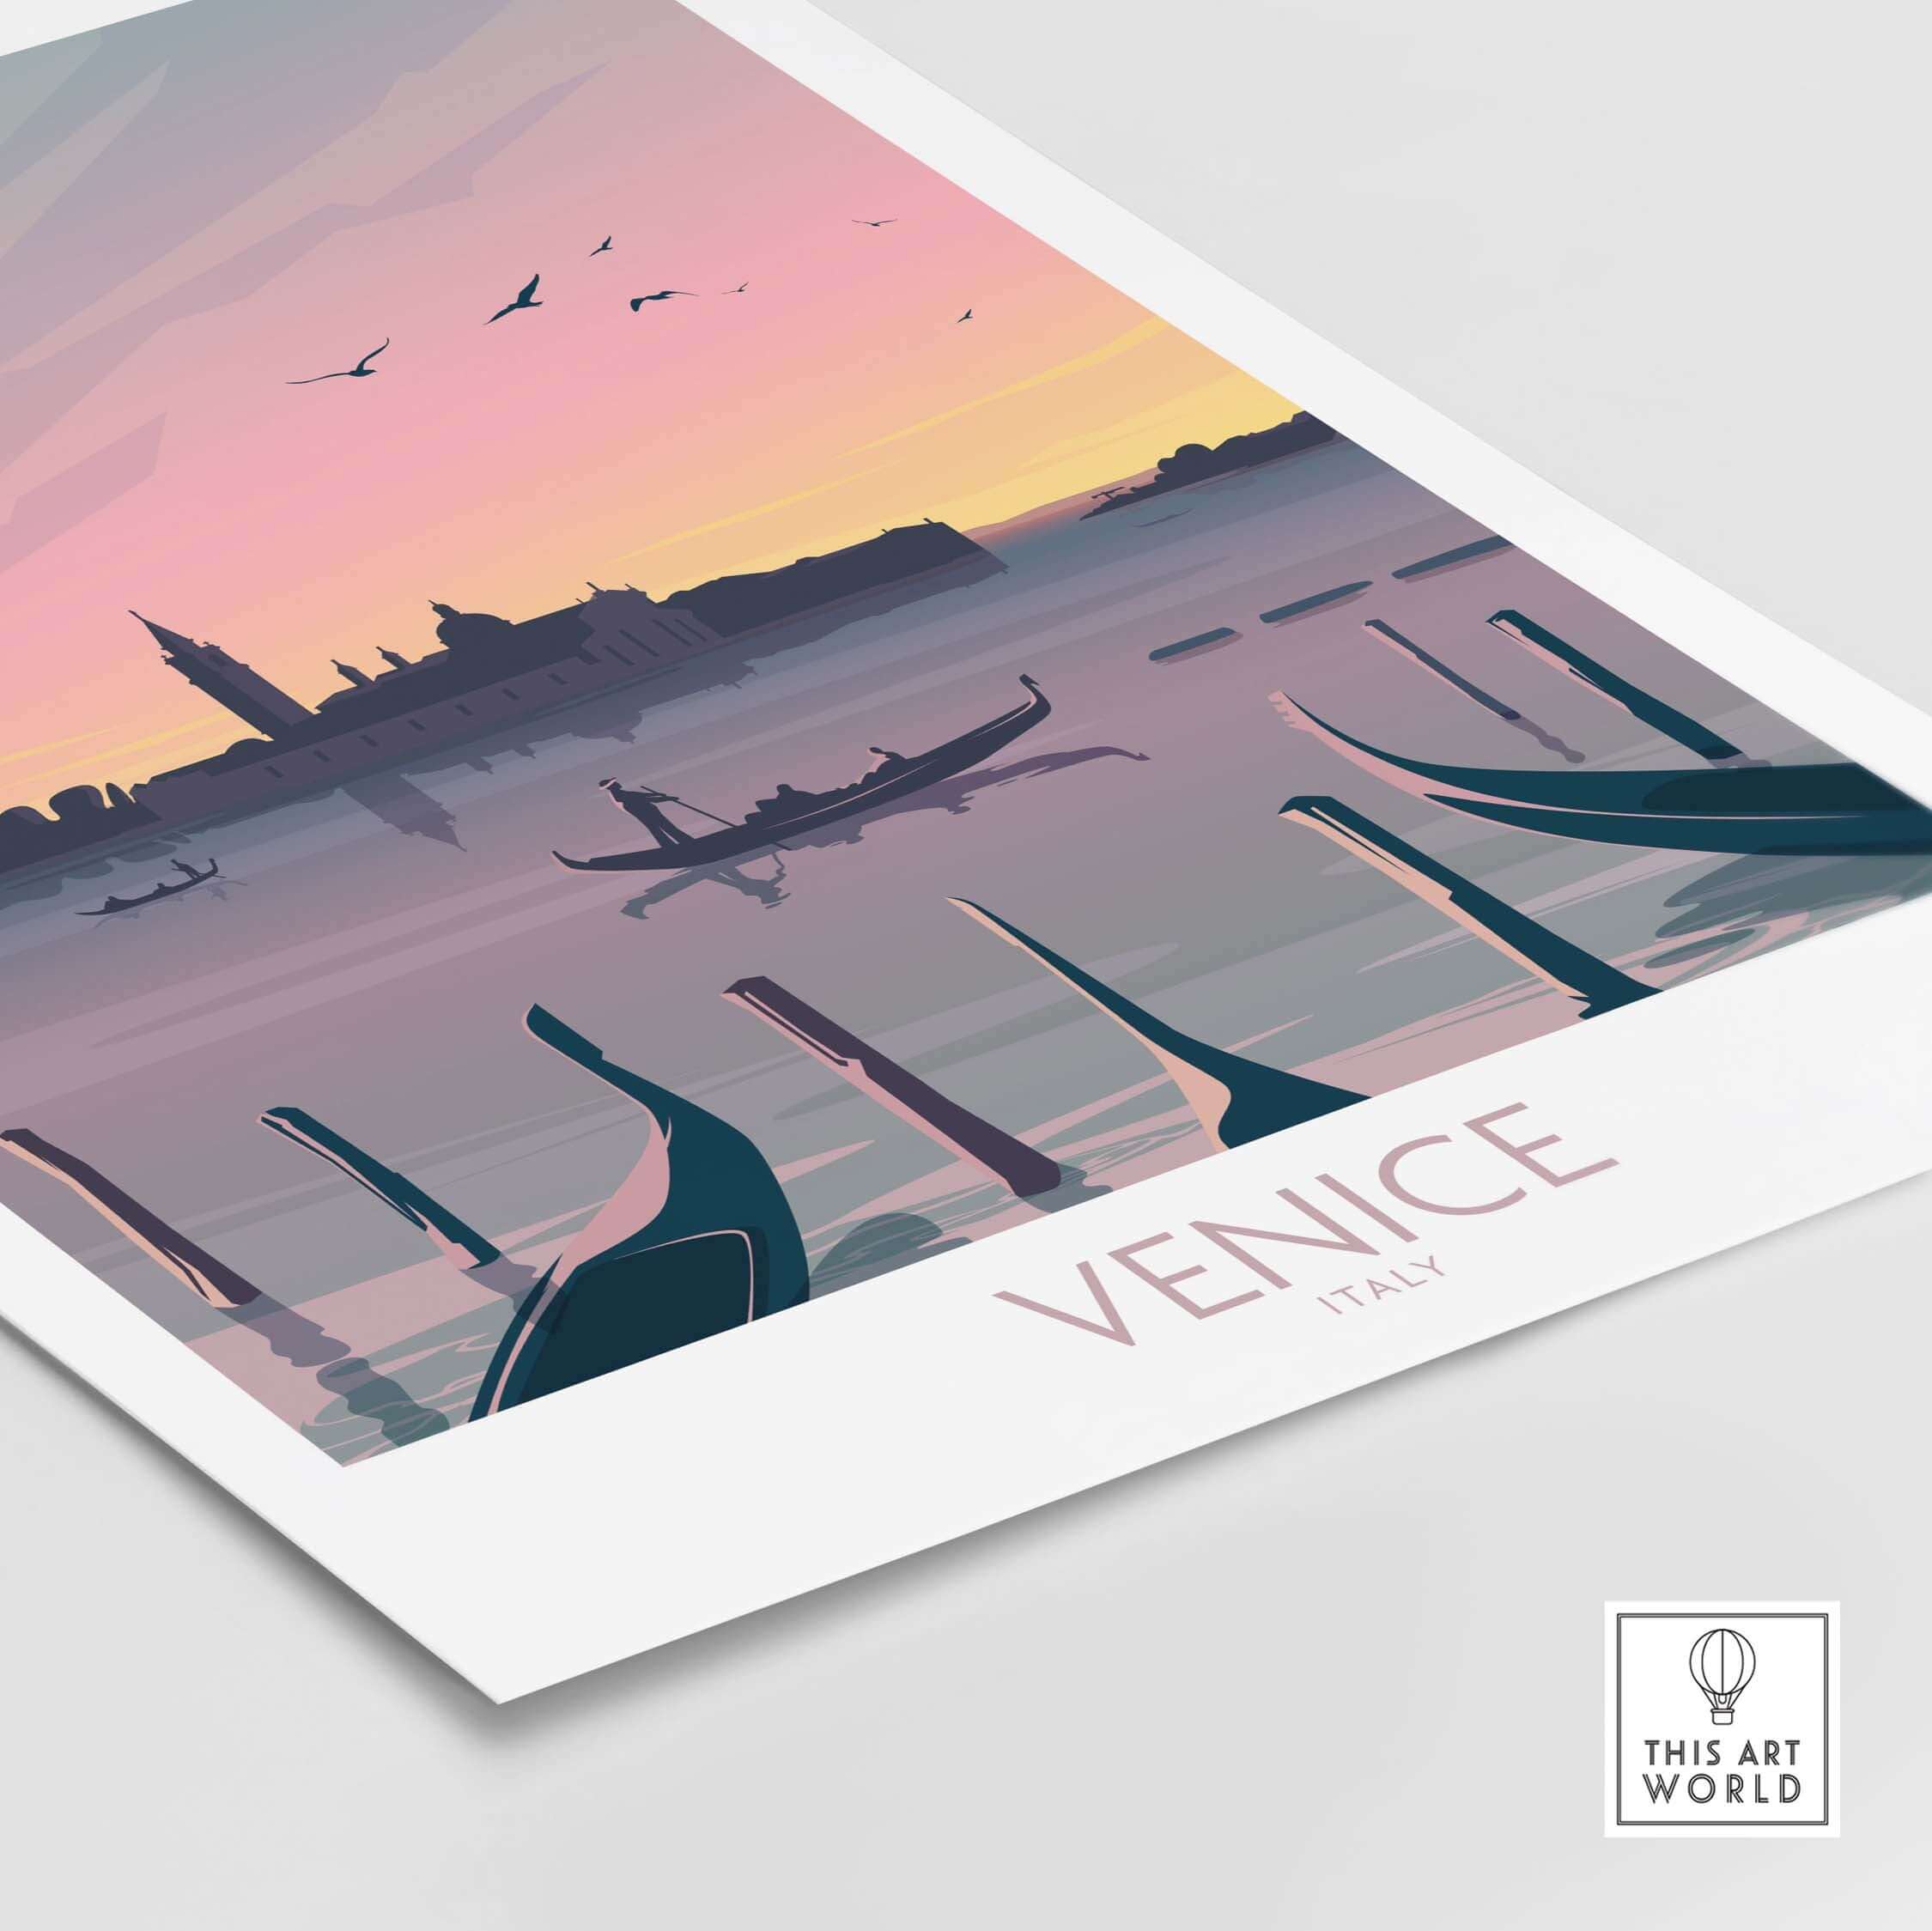 venice print travel poster